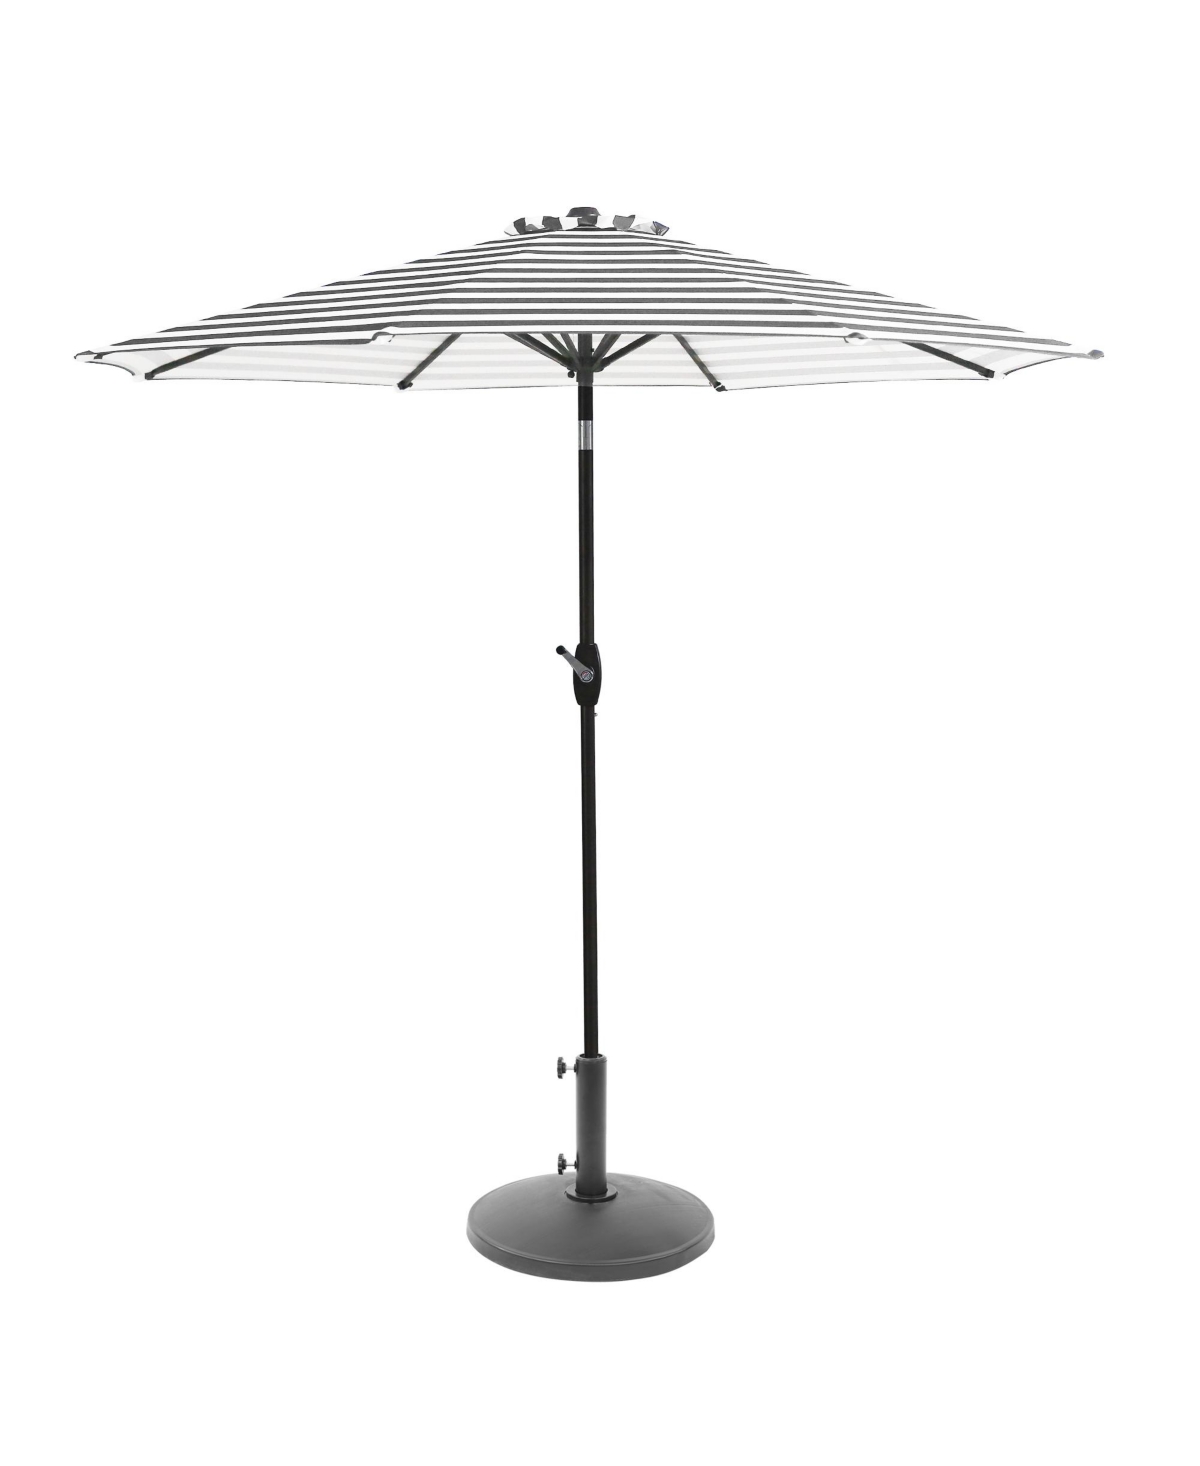 9 Ft Outdoor Patio Market Table Umbrella with Round Resin Base - Gray/ White Stripe